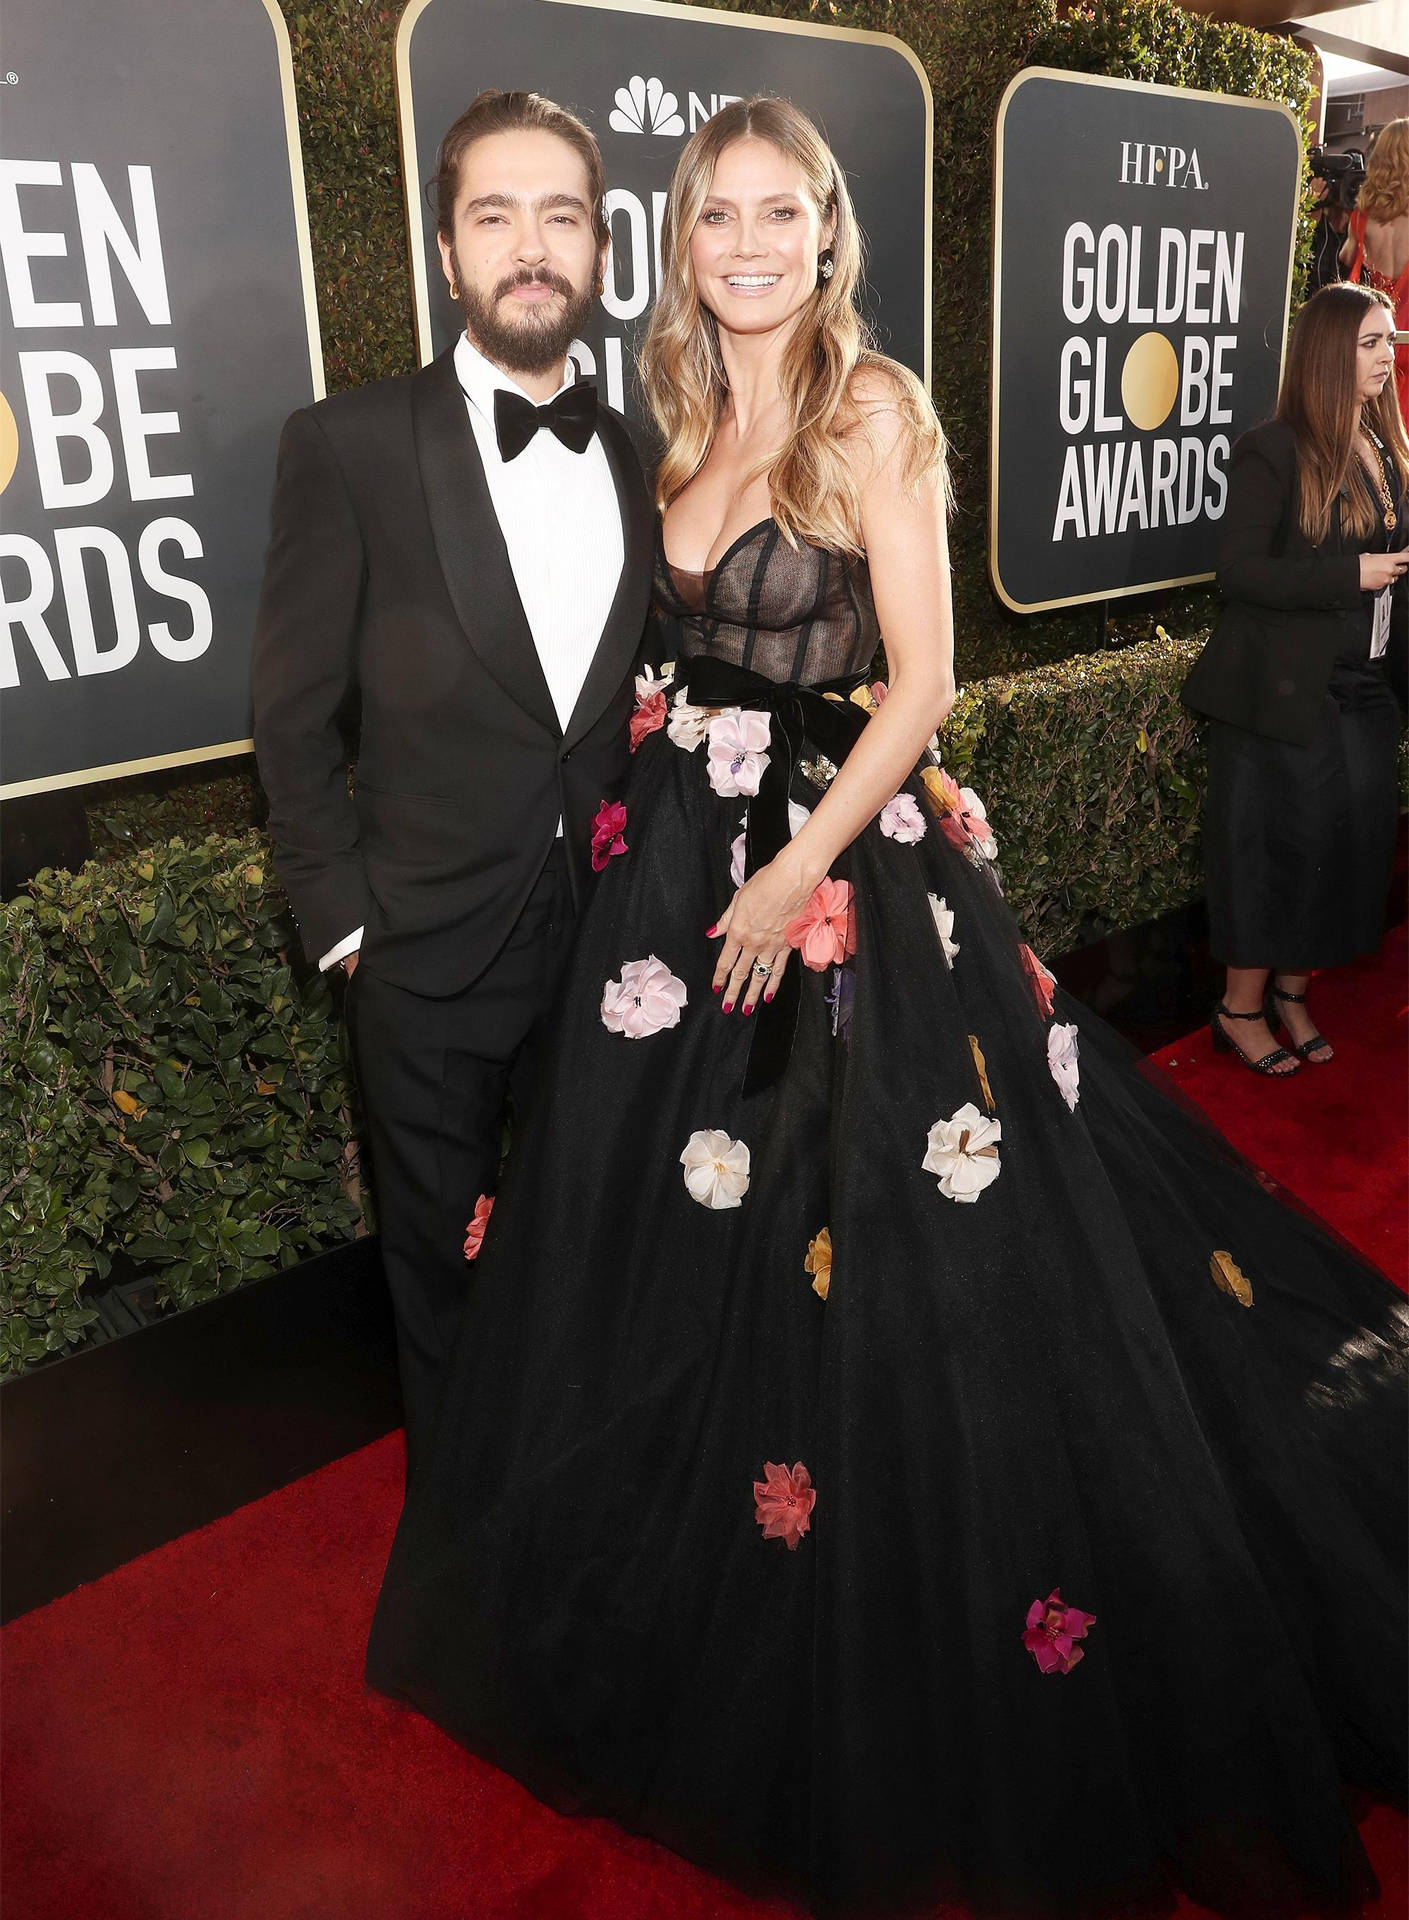 Heidi Klum On Golden Globe Awards